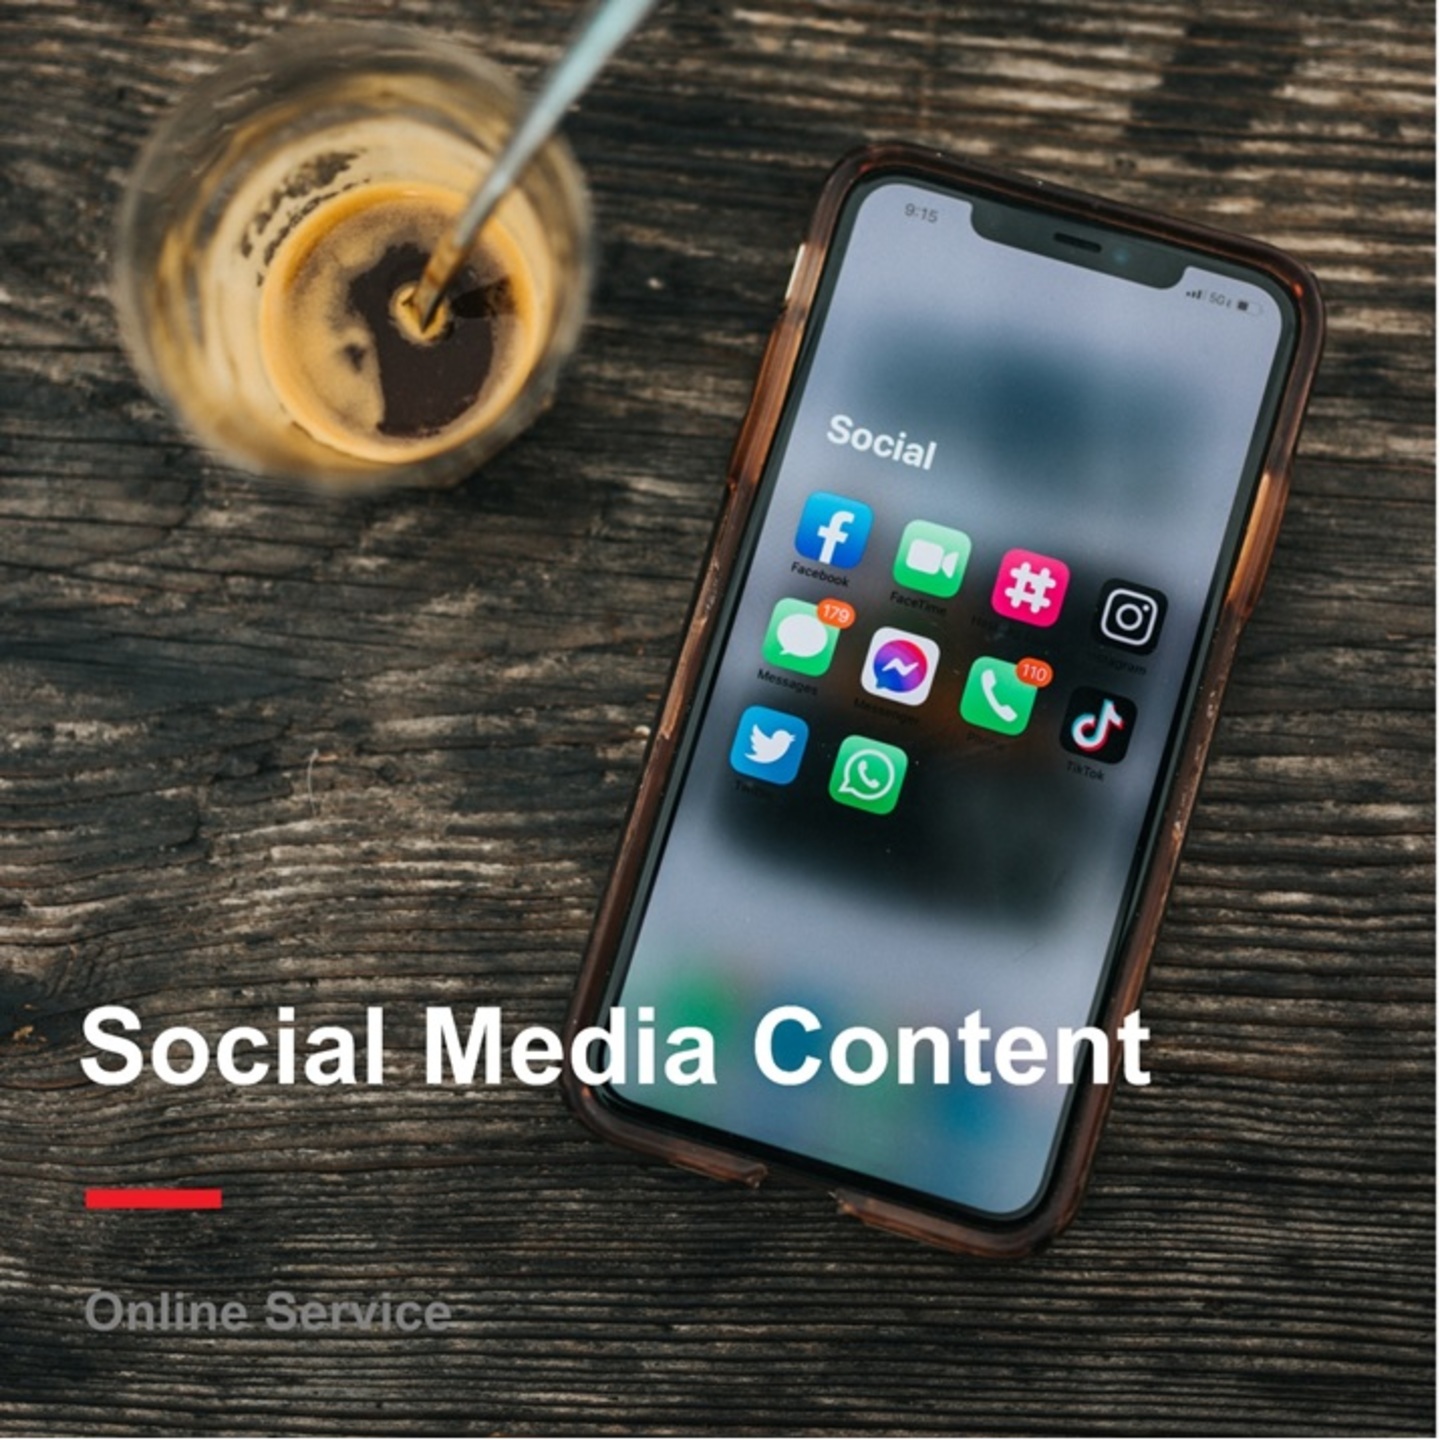 Social Media Content - 3 months 12 post